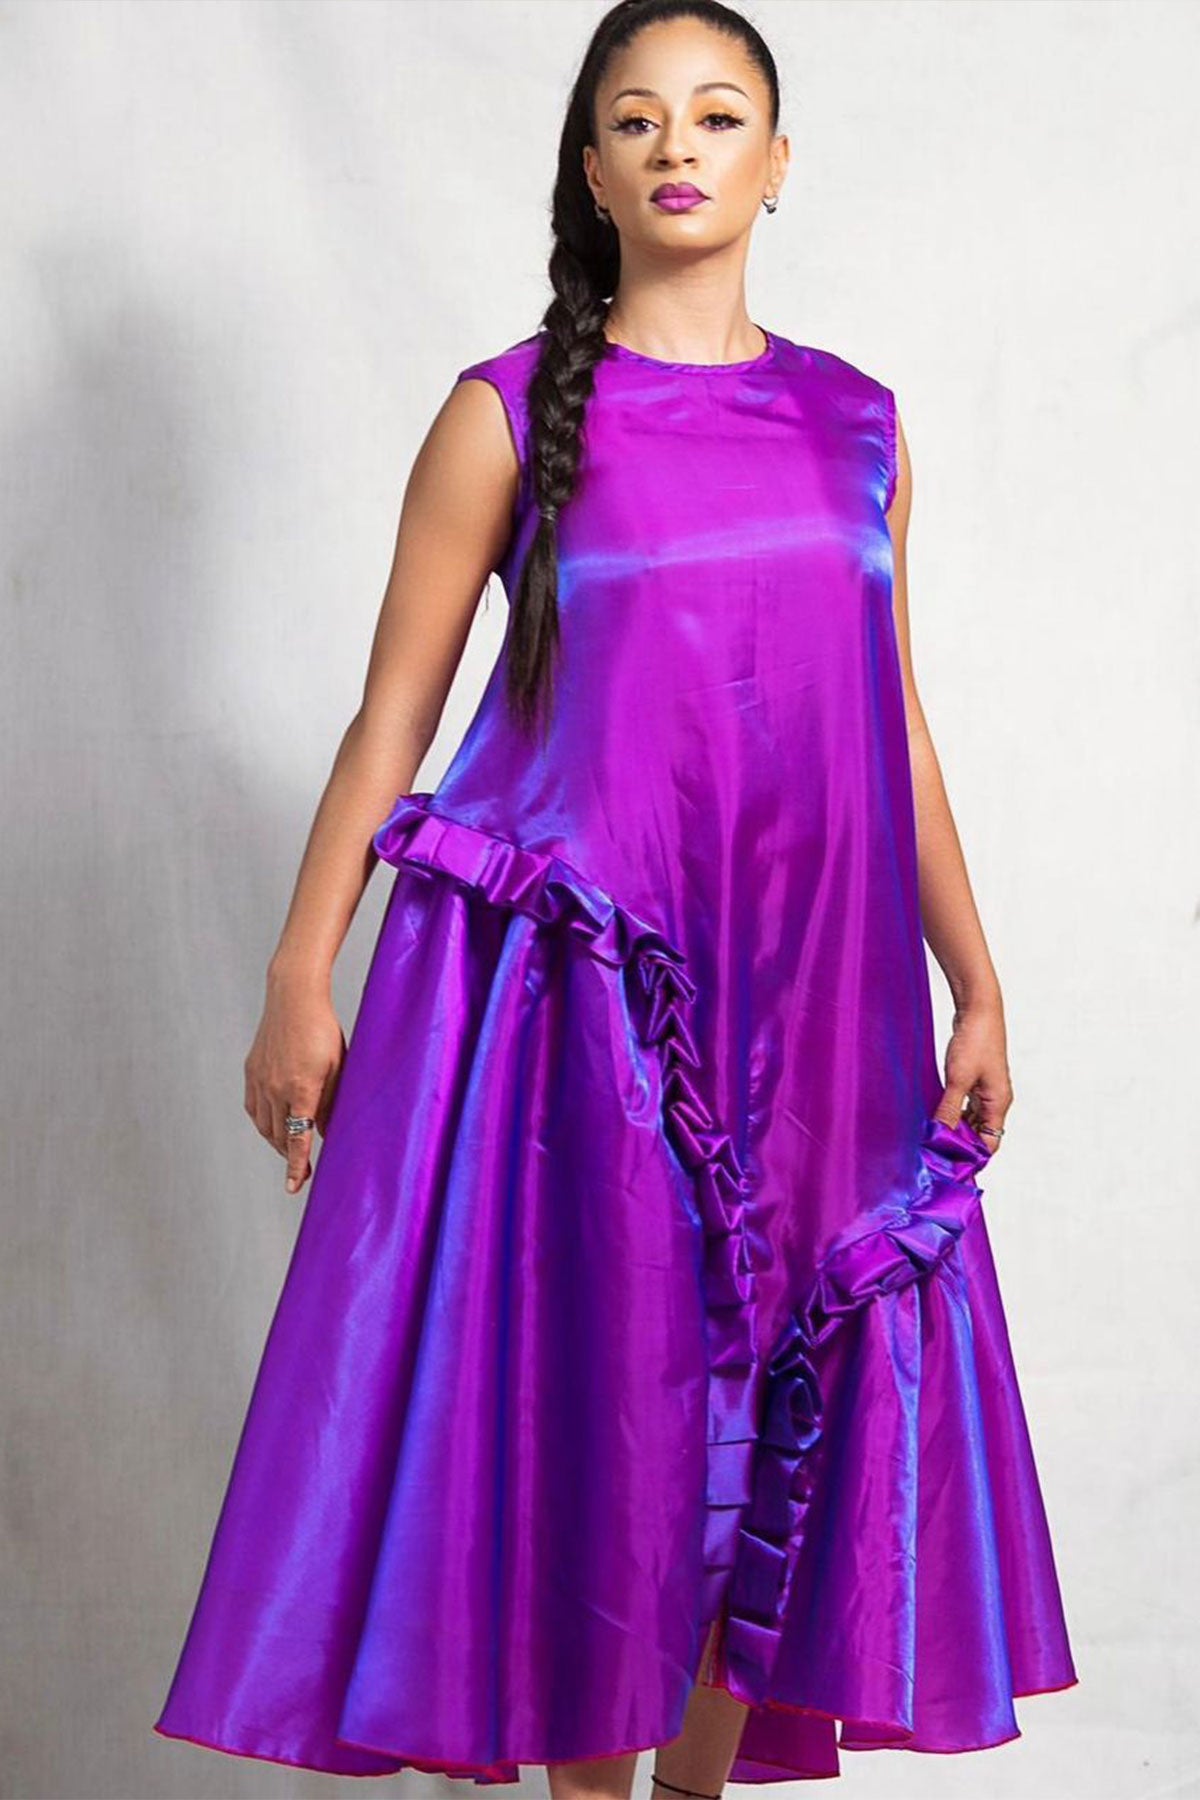 Piilz N Poizn Silk Taffeta A-Line Dress